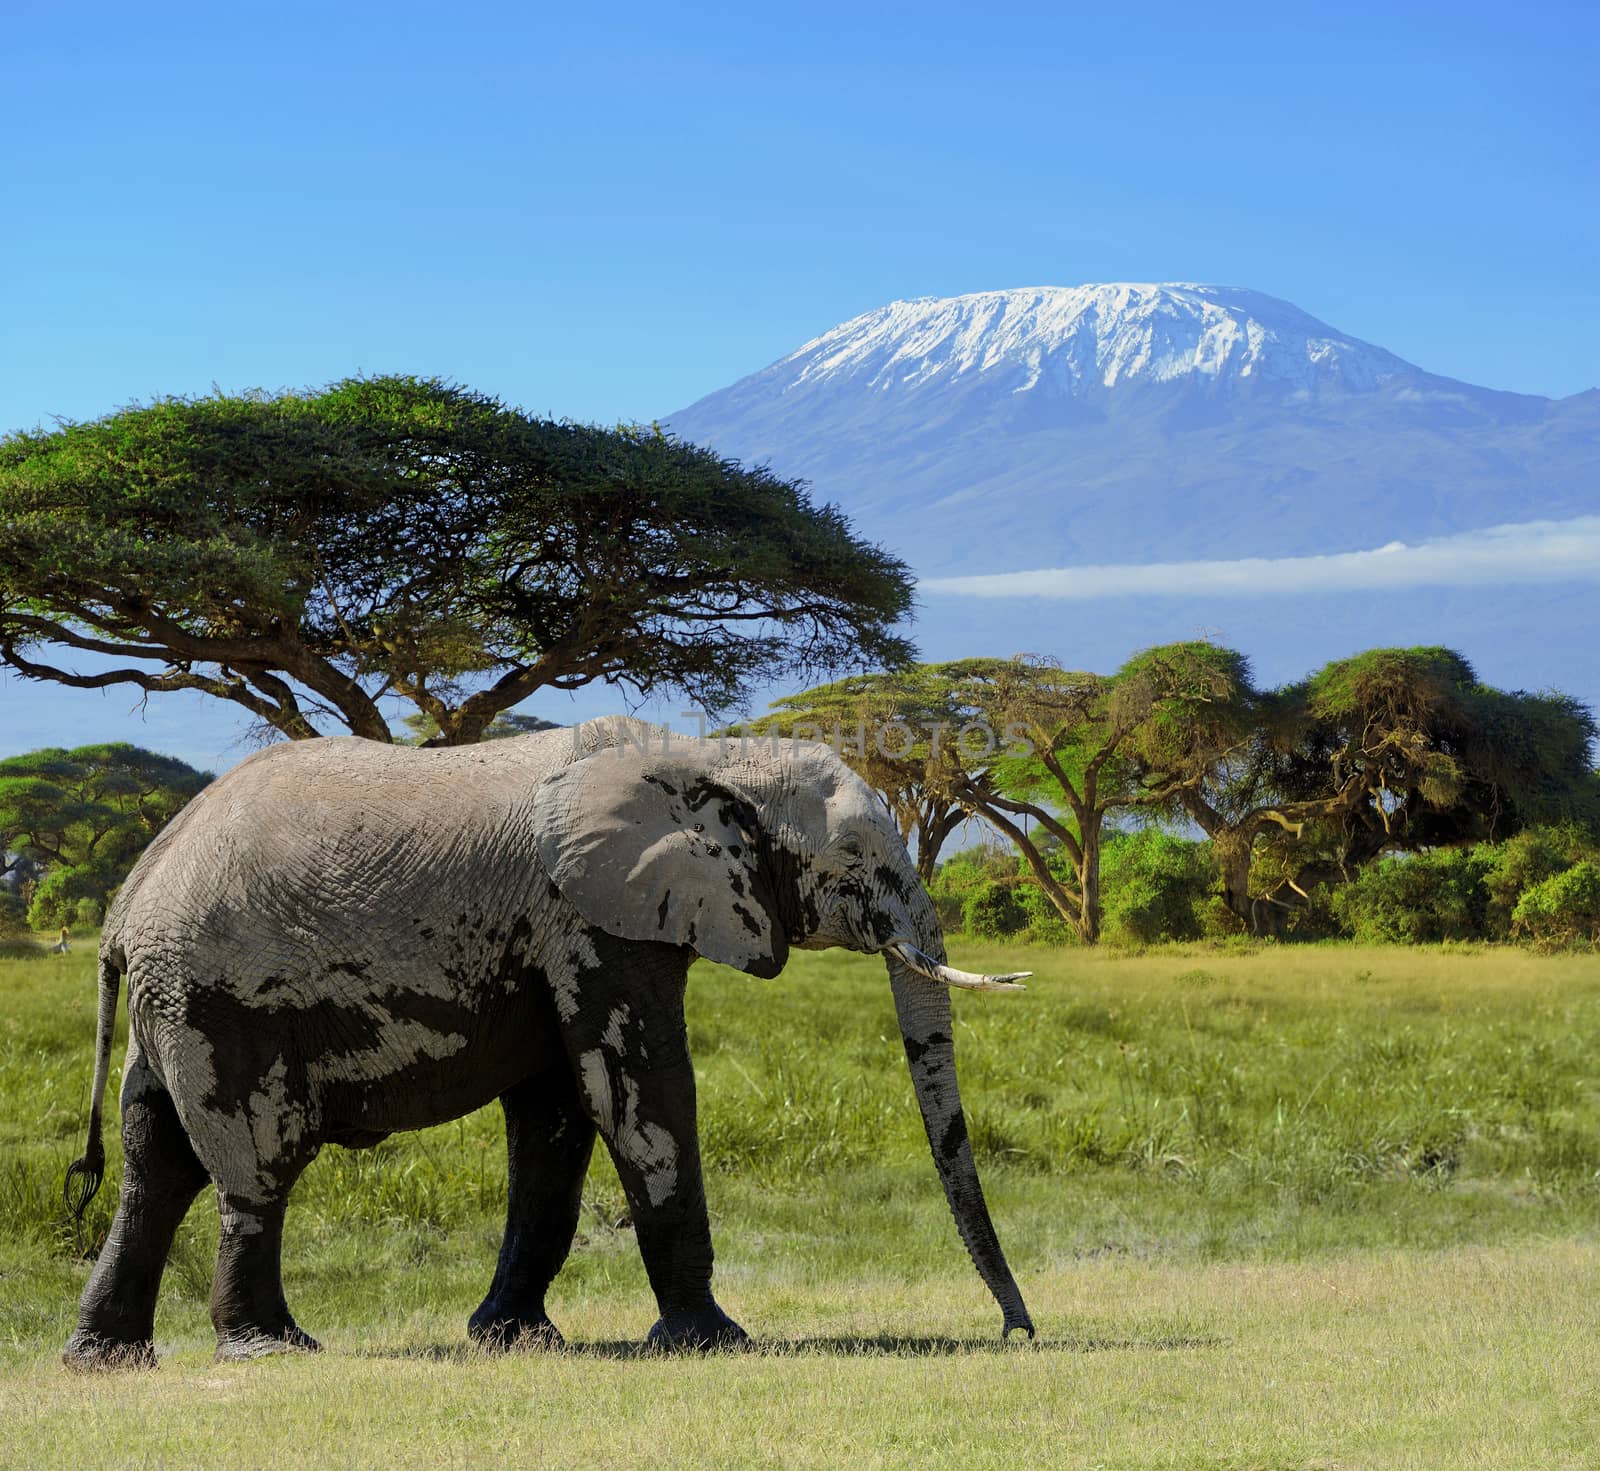 Elephant in the wild - national park Kenya